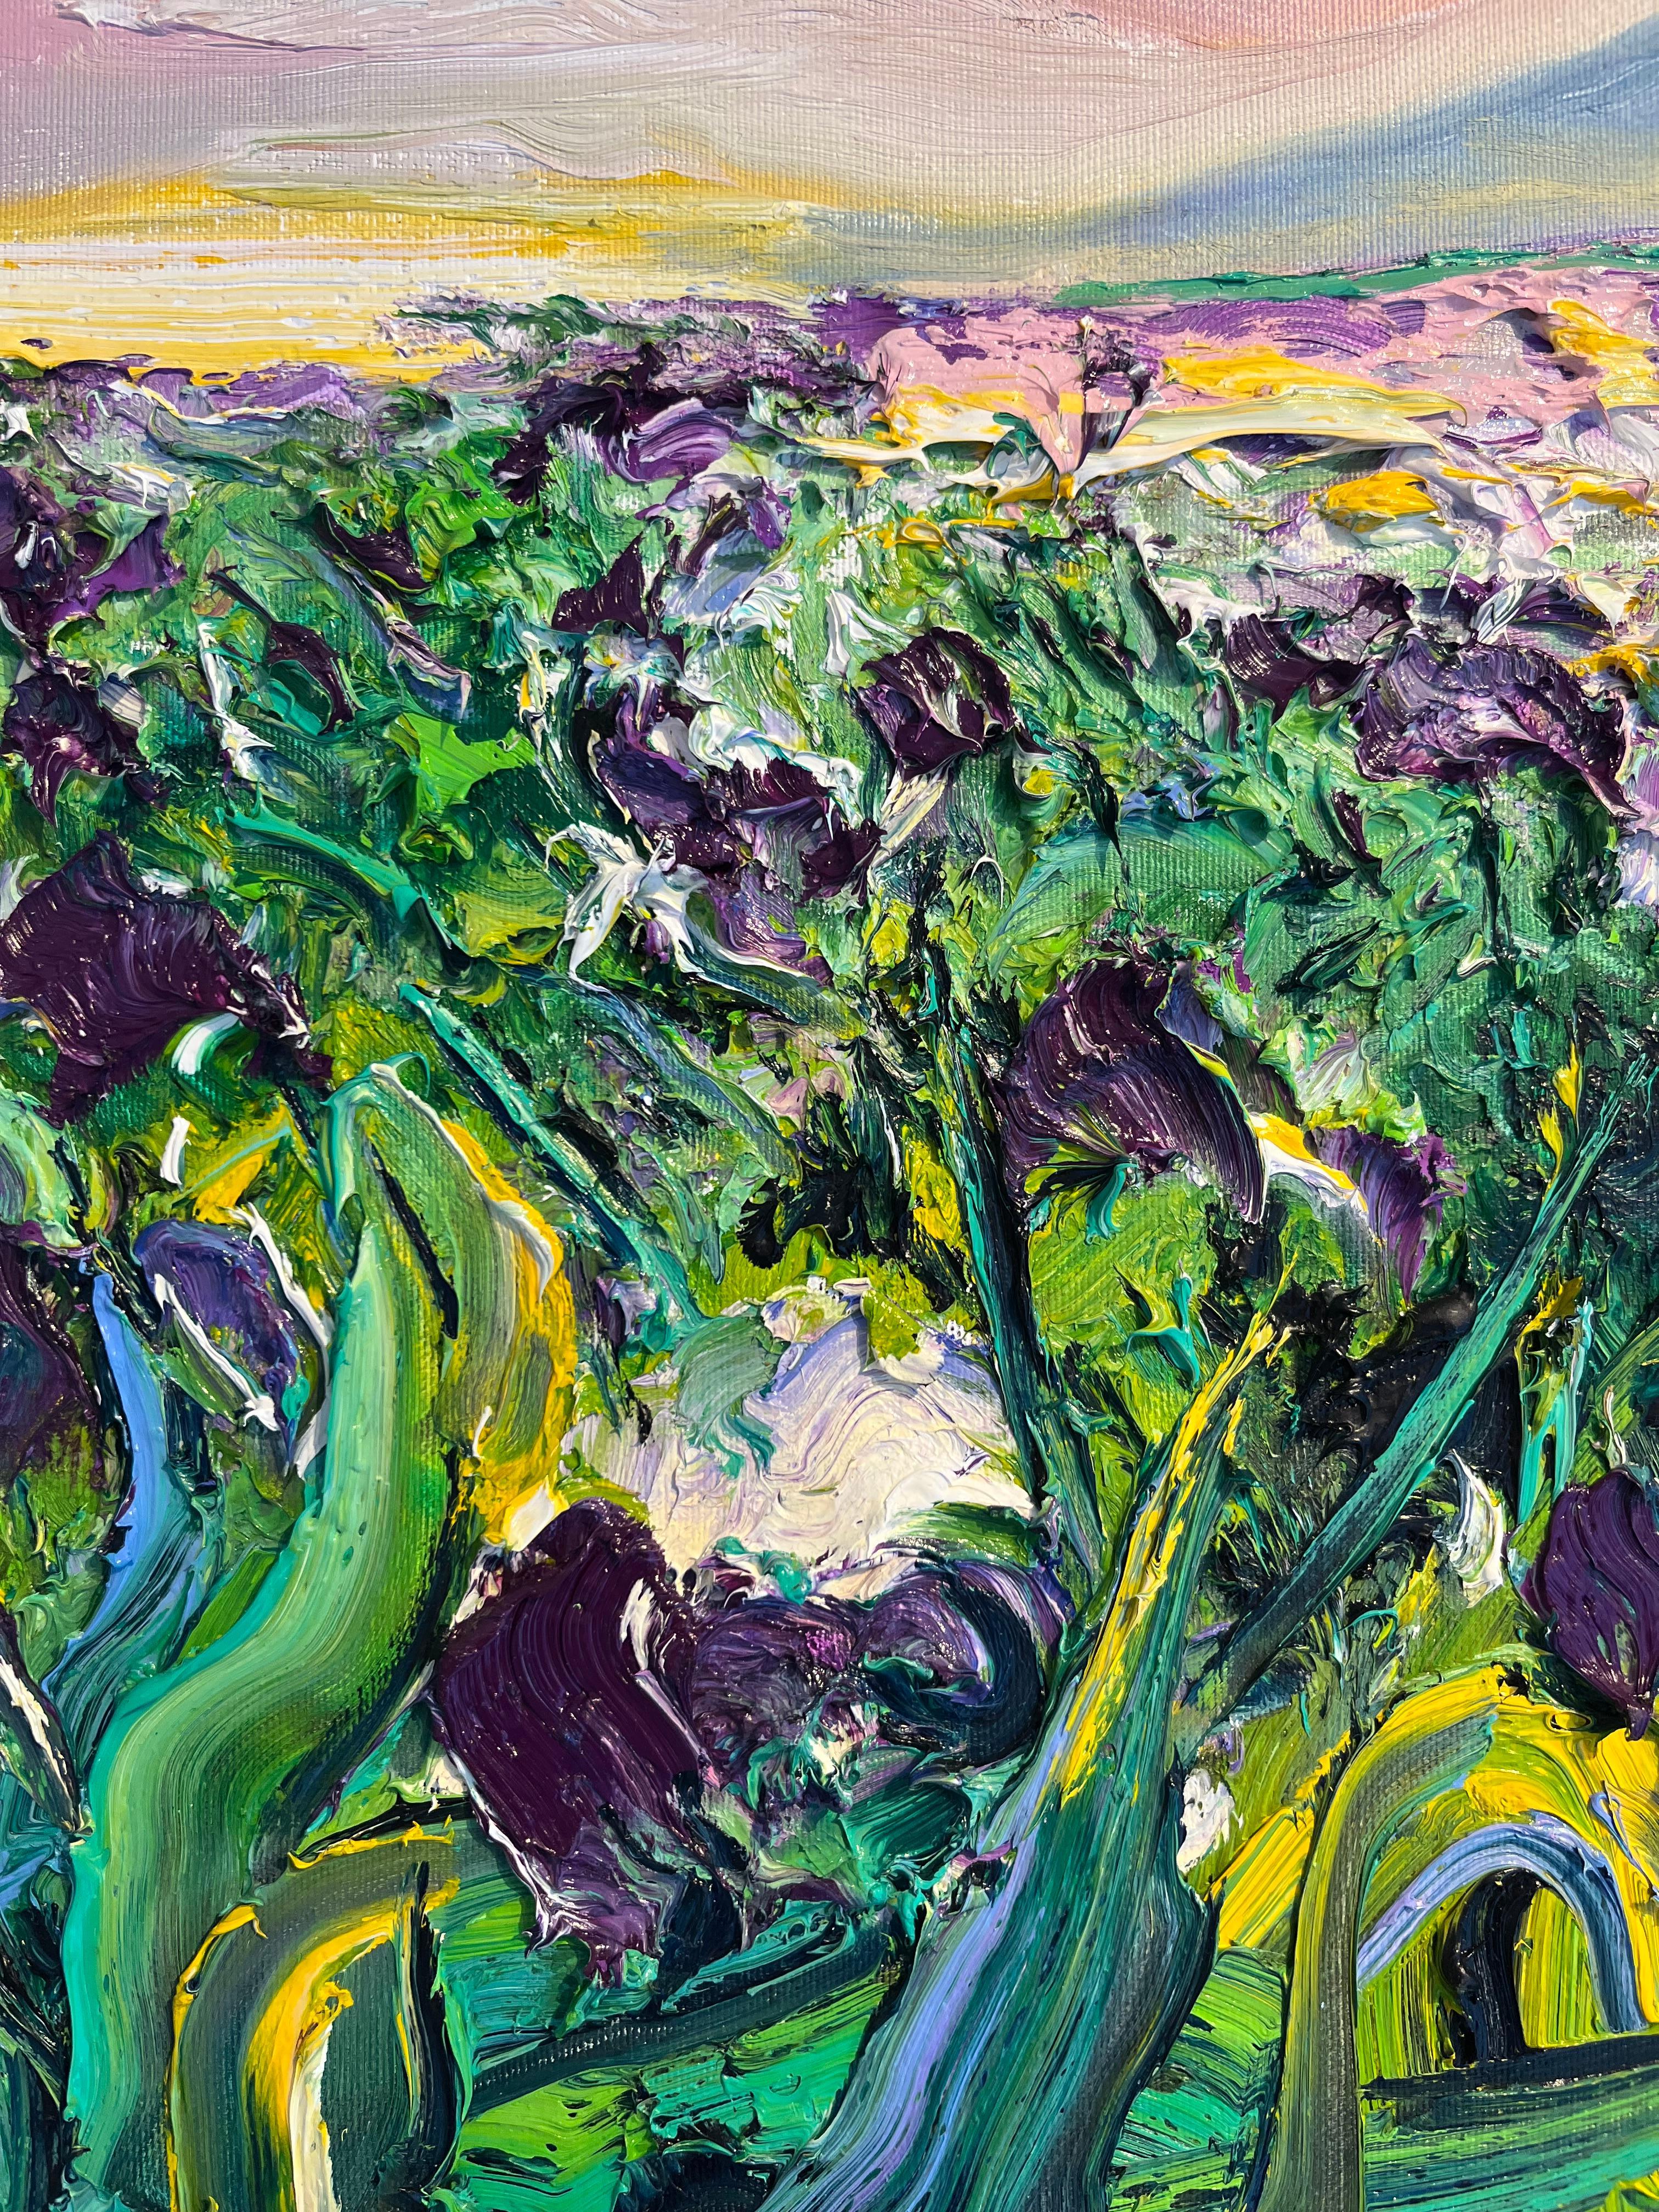 Iris Field-Original impressionism floral landscape oil painting-contemporary Art For Sale 3